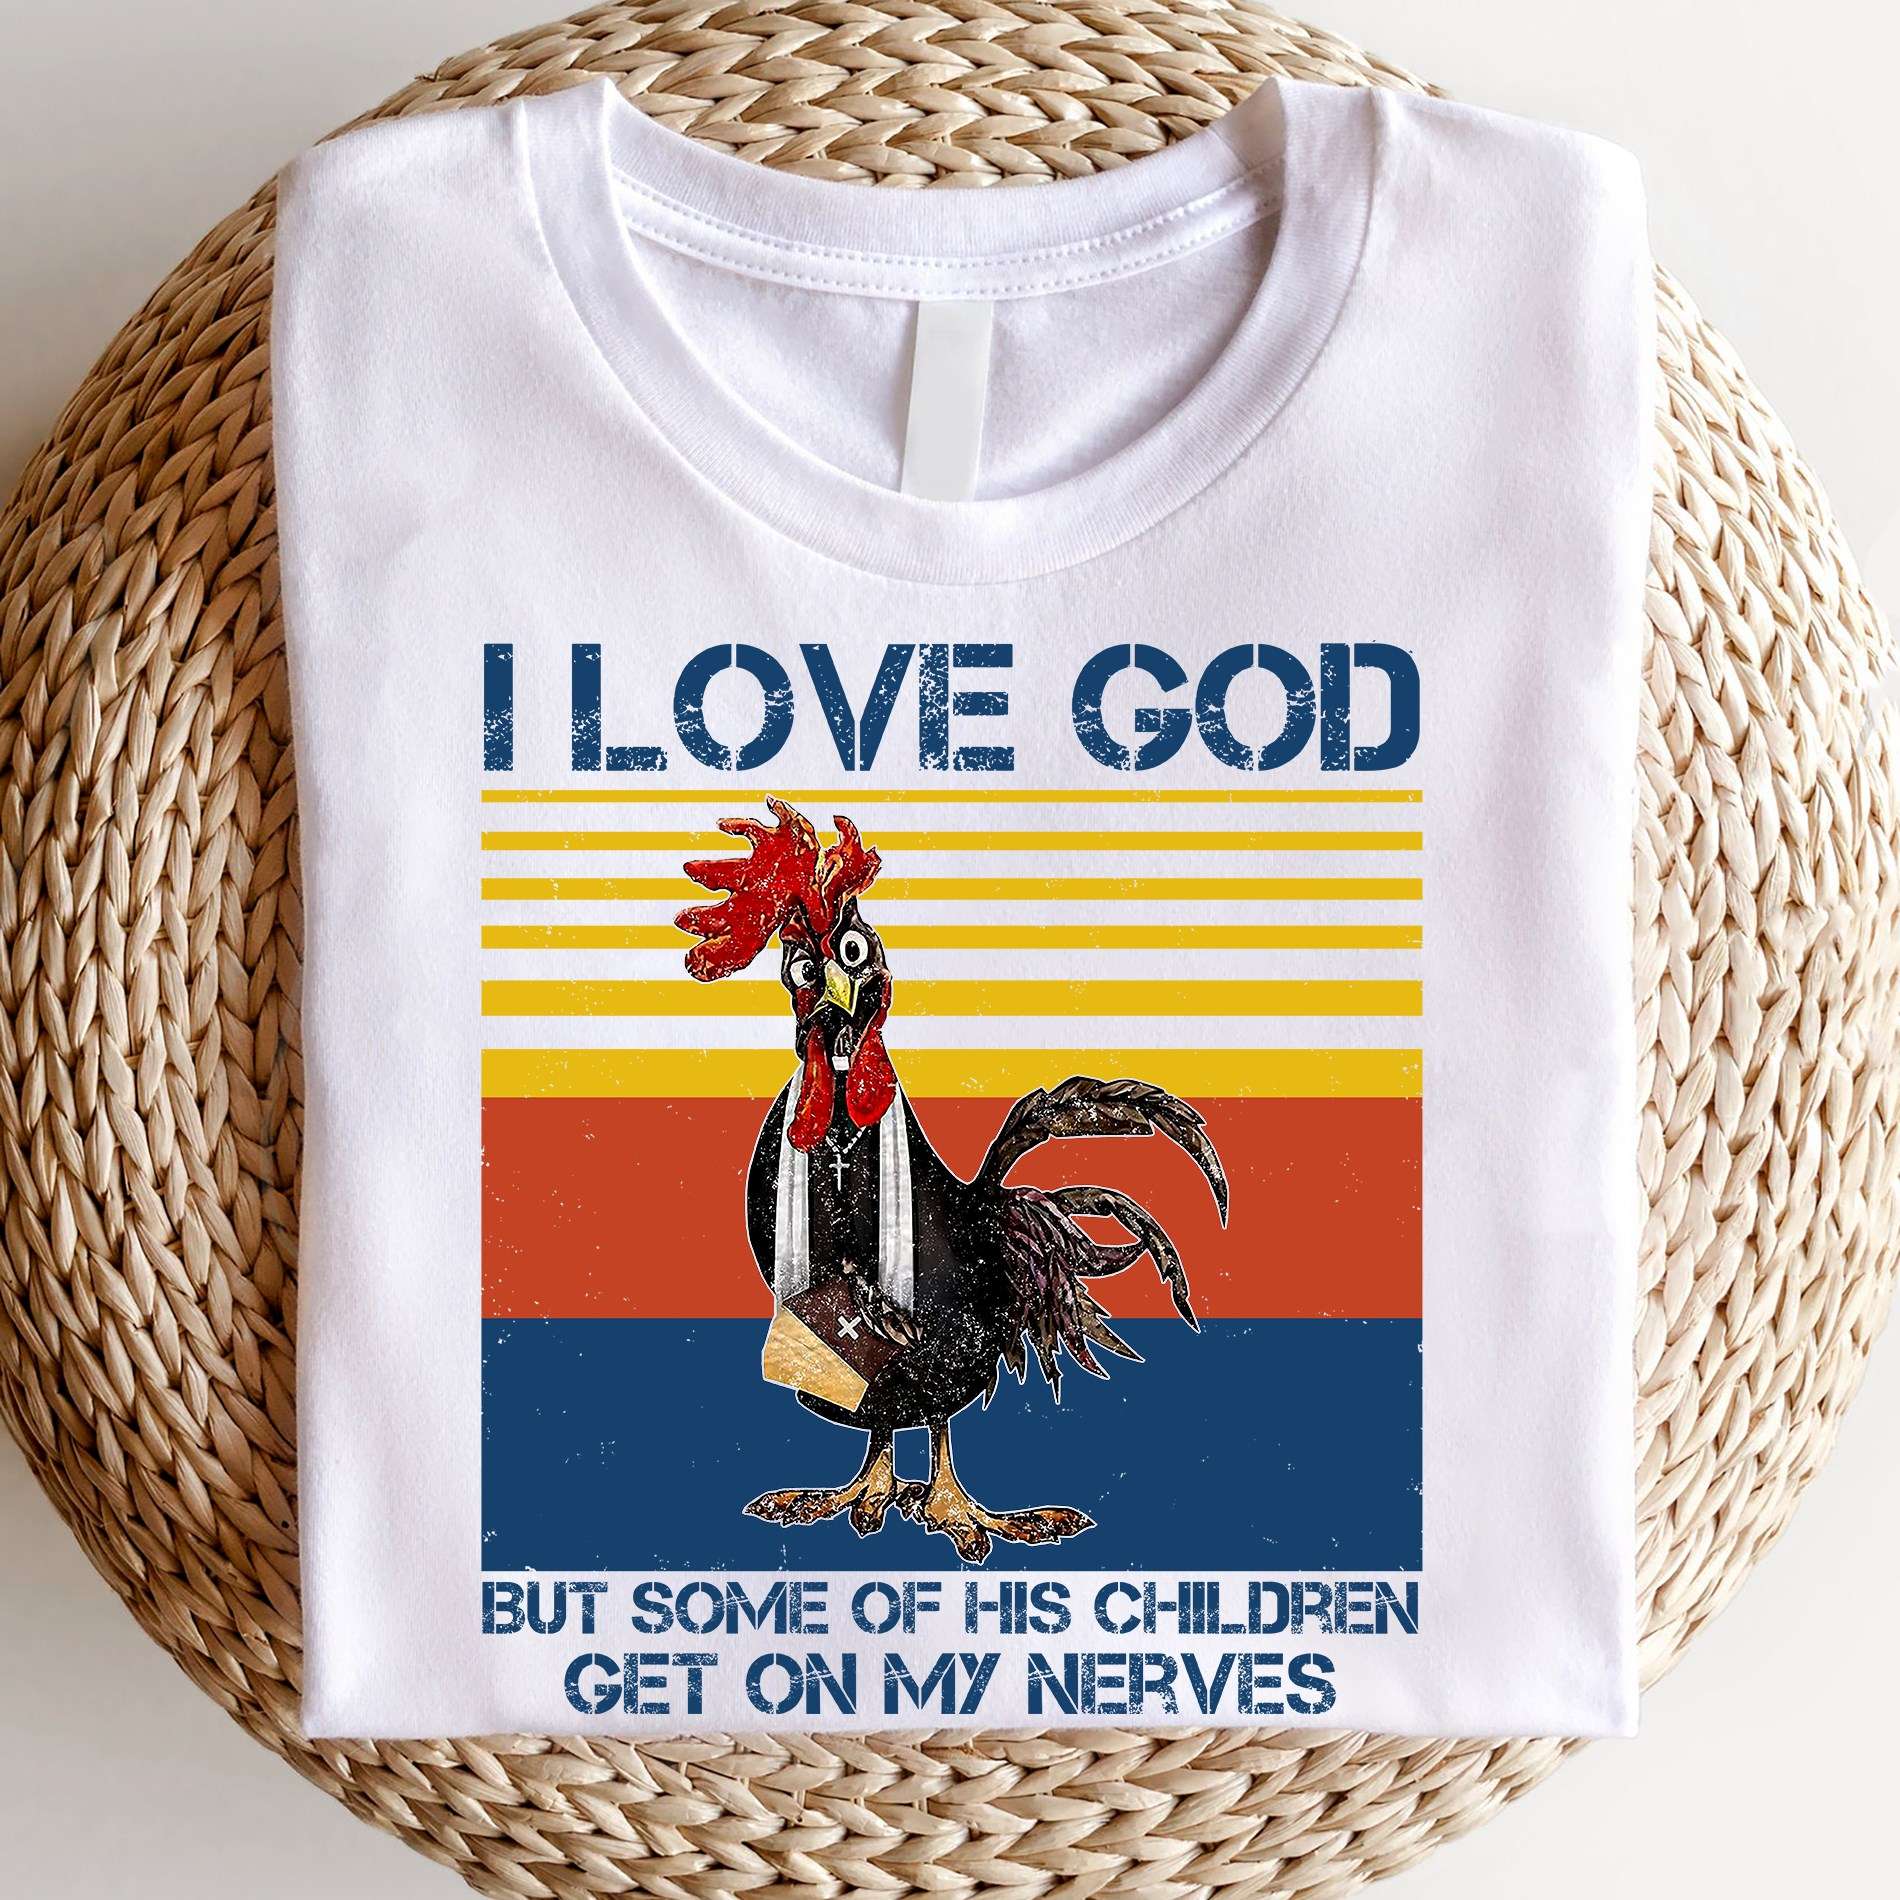 Injured Chicken - I love god but some of his children get on my nerves